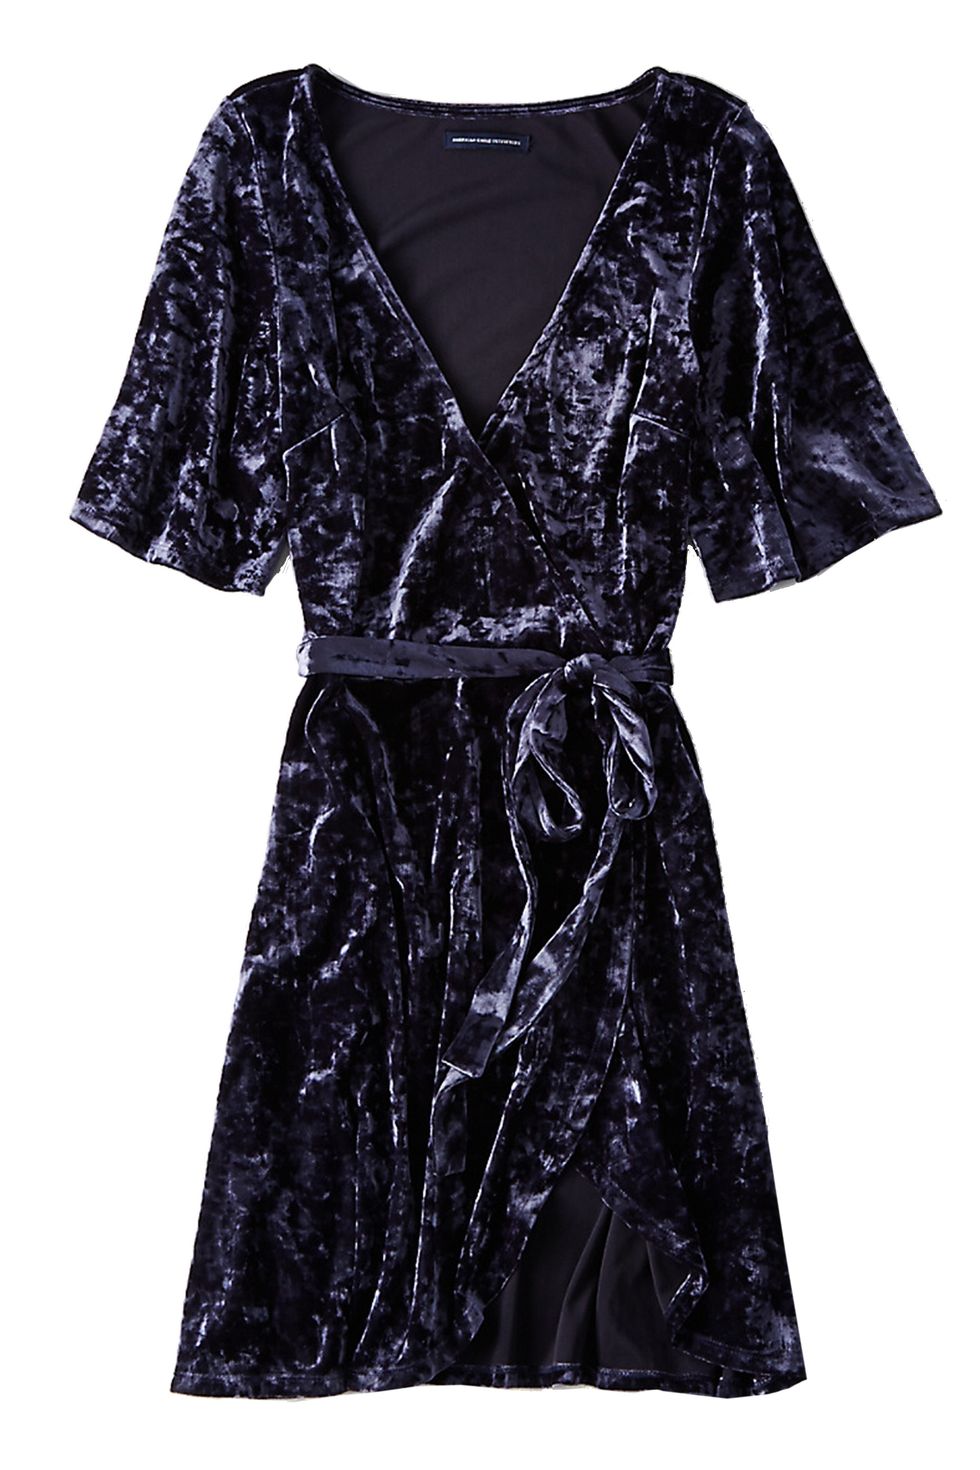 <p>AEO Velvet Tie Dress, $30; <a href="https://www.ae.com/women-aeo-velvet-tie-dress-navy/web/s-prod/0395_1401_410?cm=sUS-cUSD&amp;catId=cat6190040" target="_blank">ae.com</a></p>